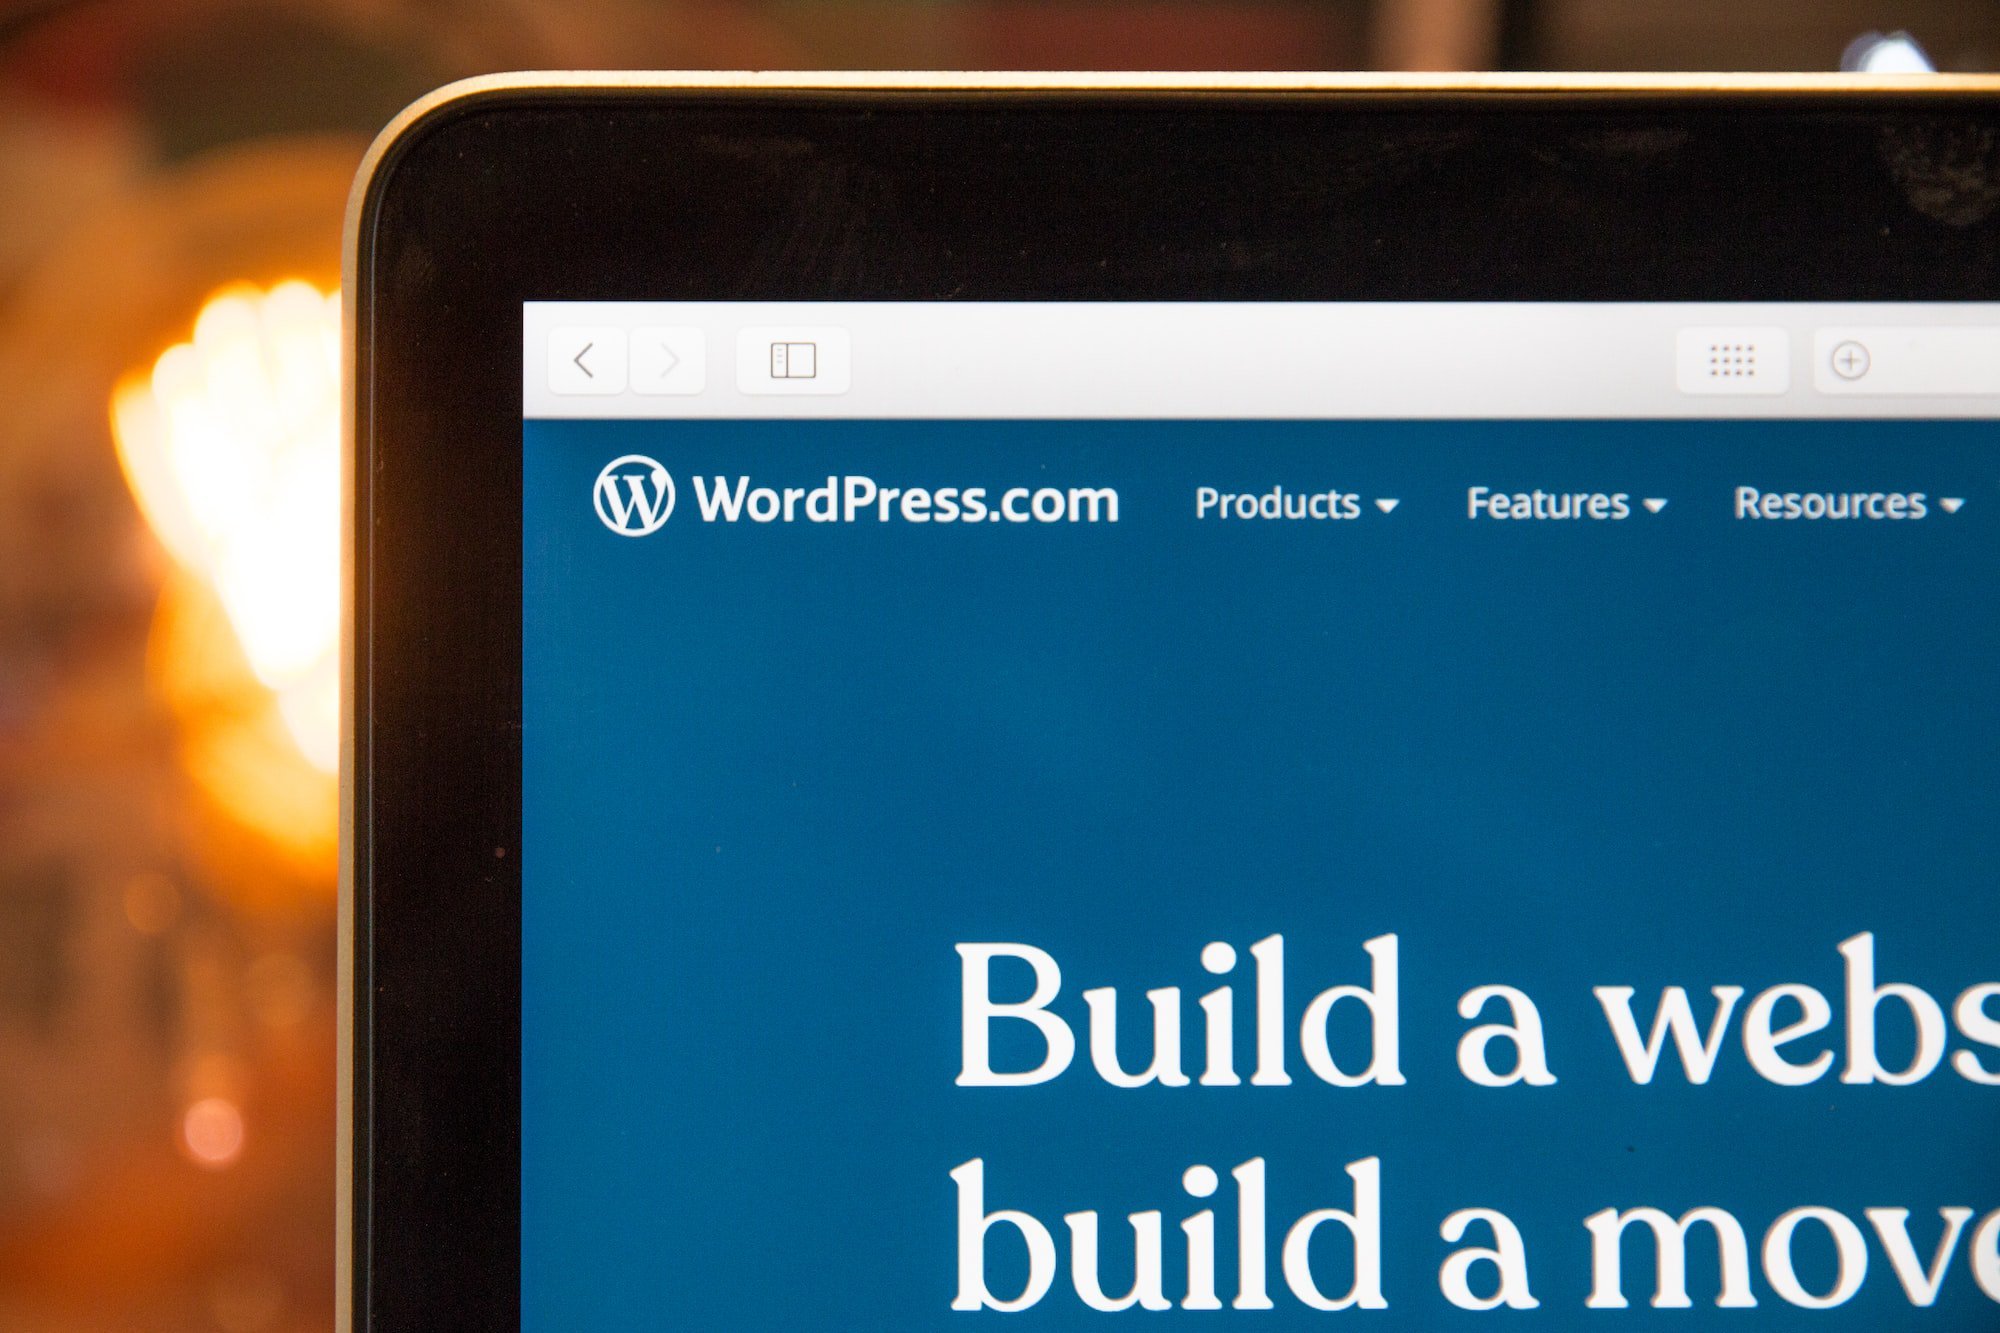 The wordpress website's navigation menu is displayed on a laptop.